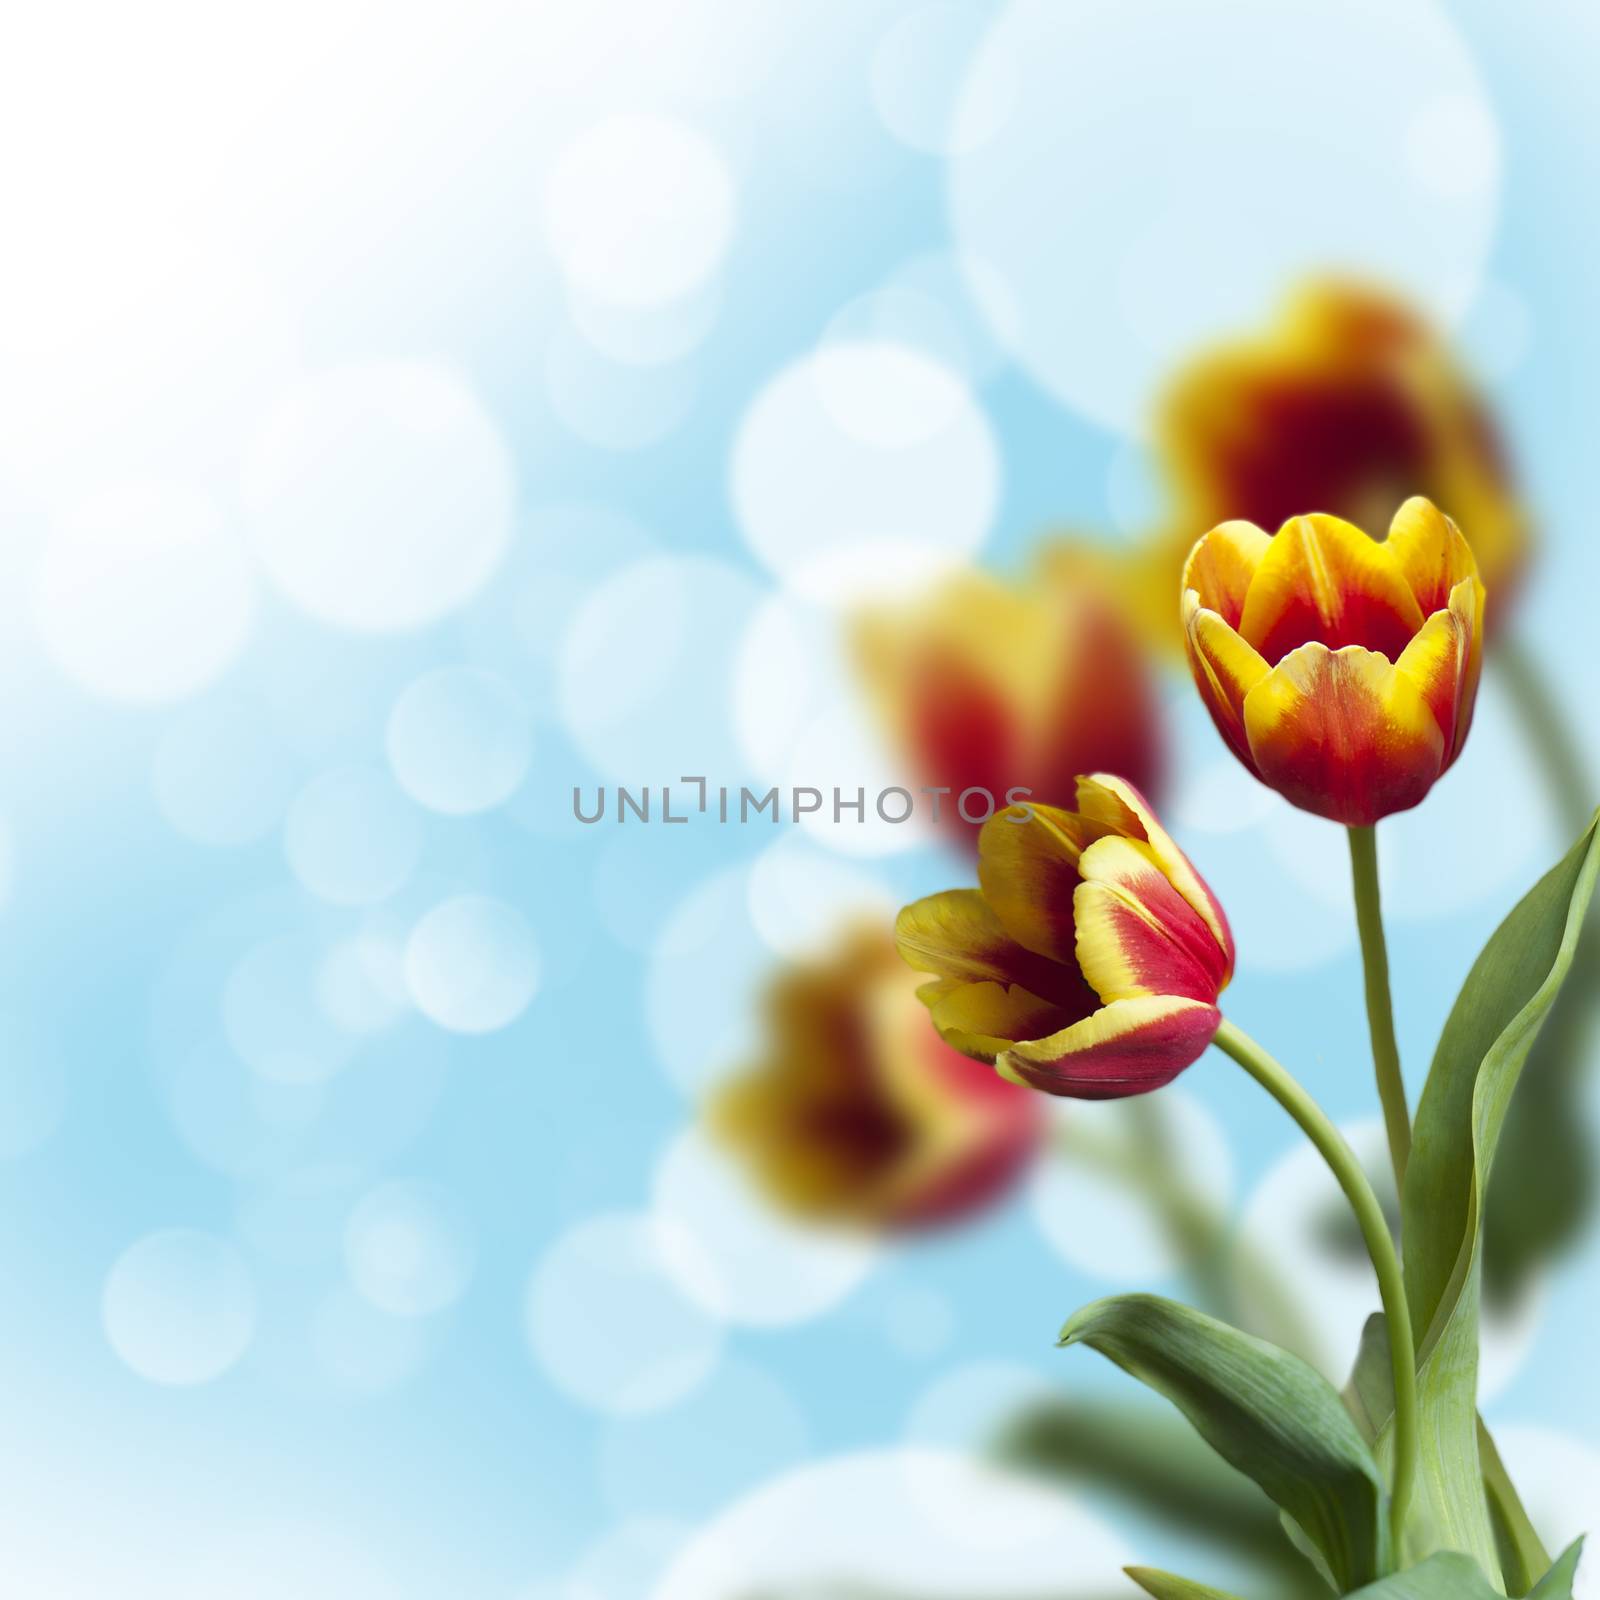 beautiful tulips by raduga21